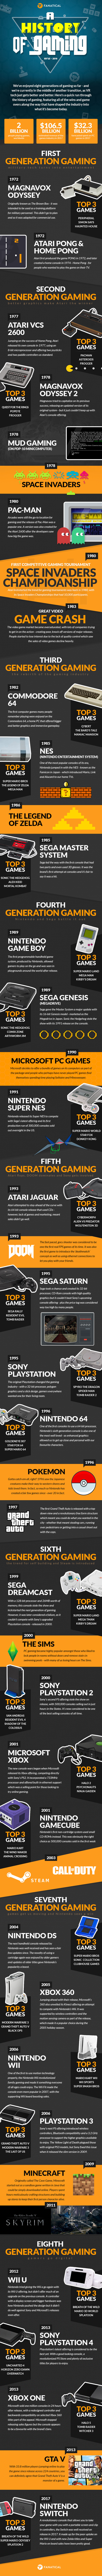 A History of Gaming